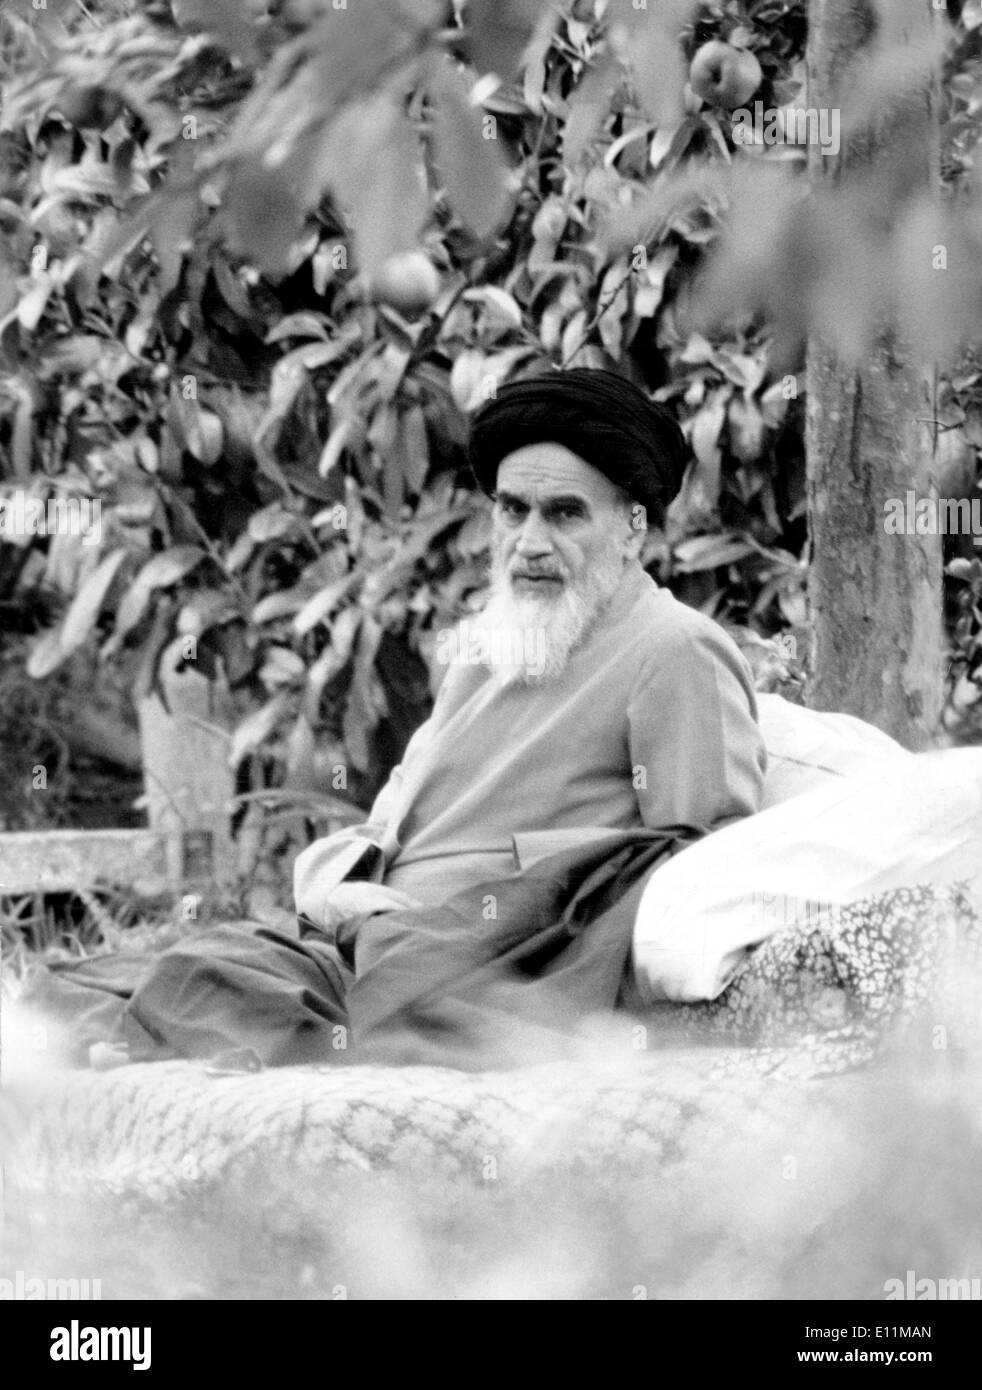 5084280 (900326) Ajatollah Khomeini, (24.09.1902 - 03.06.1989, Ruhollah Mussawi HENDI) iranischer Religionsf hrer und Foto Stock